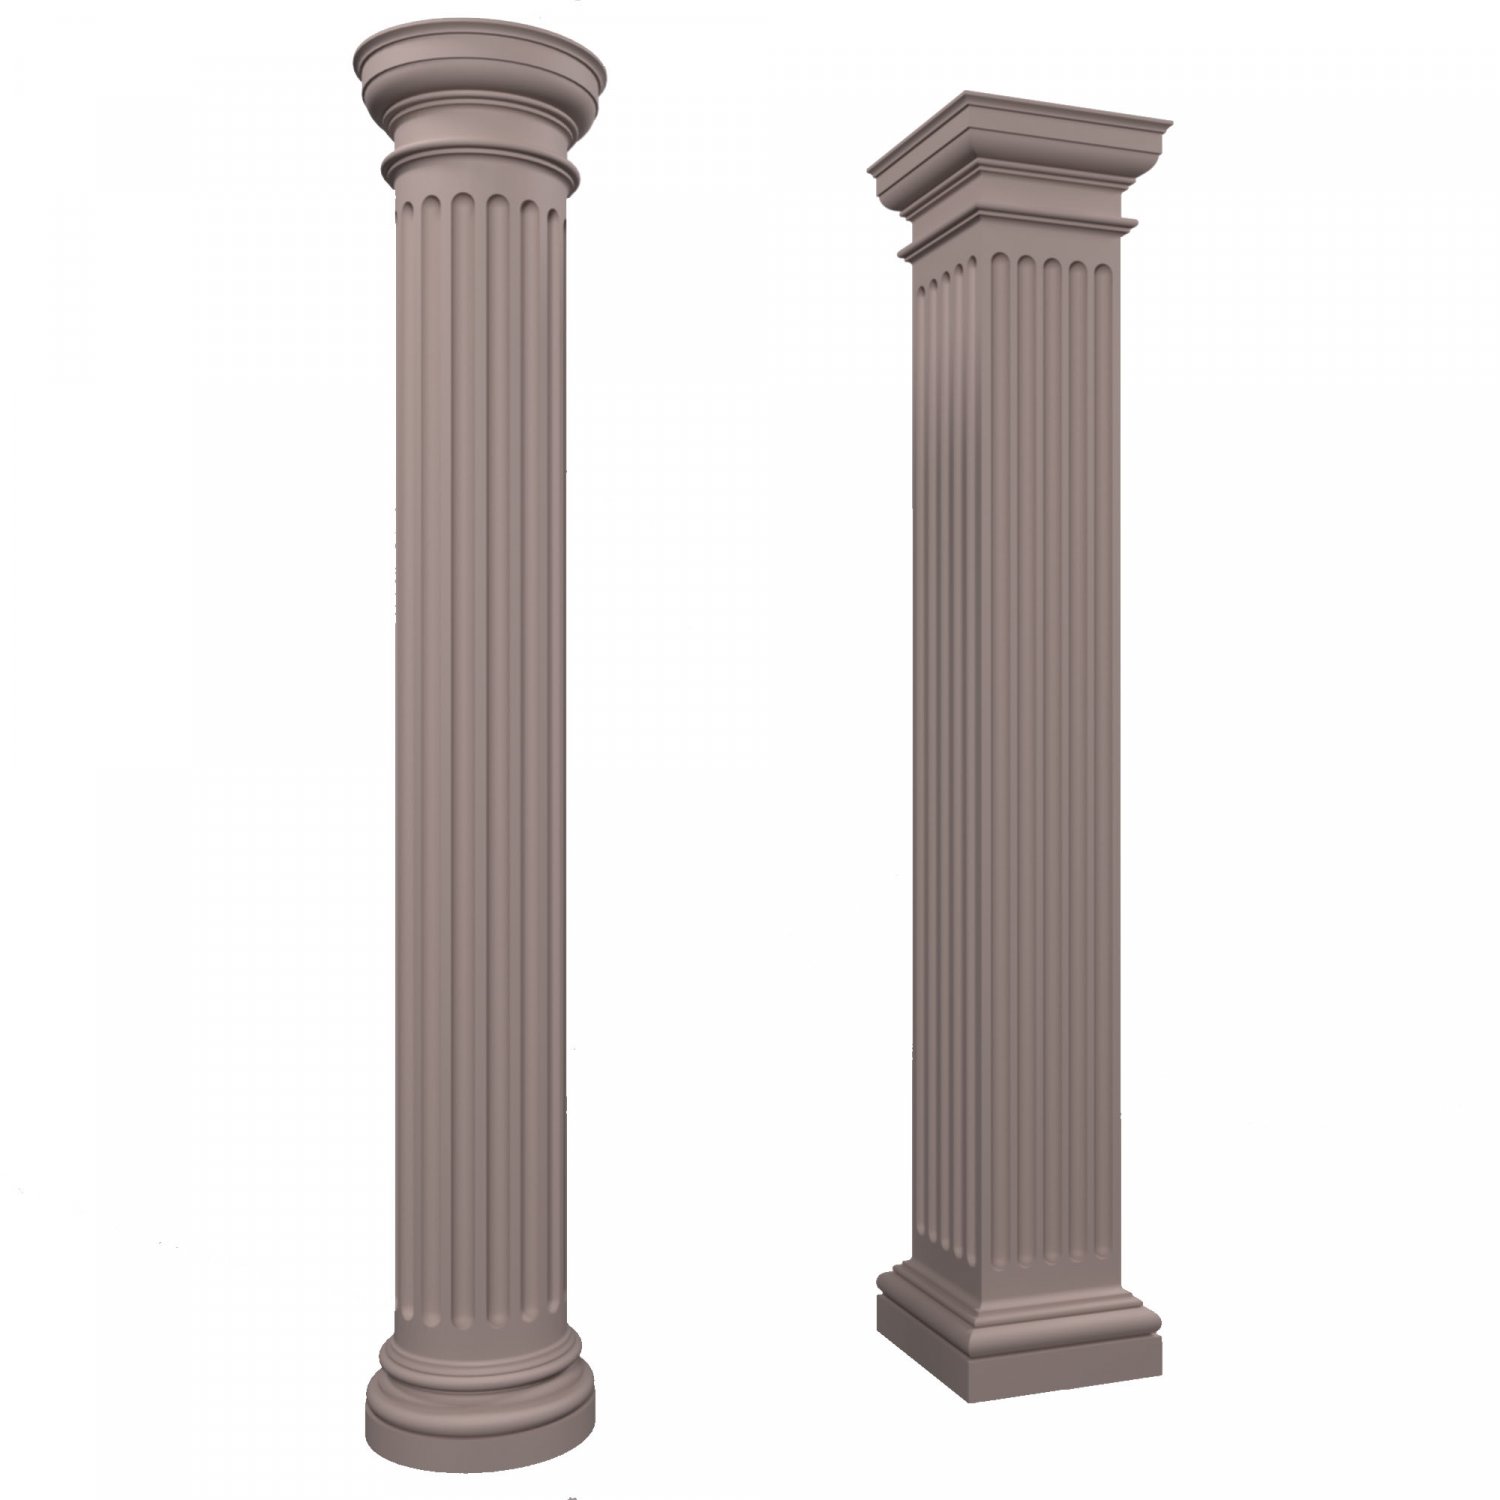 Three column. Пилястр квадрат 100/100 обравлени столб. Желобчатые колонны NW 250мм. Квадратная колонна. Обрамление колонн.